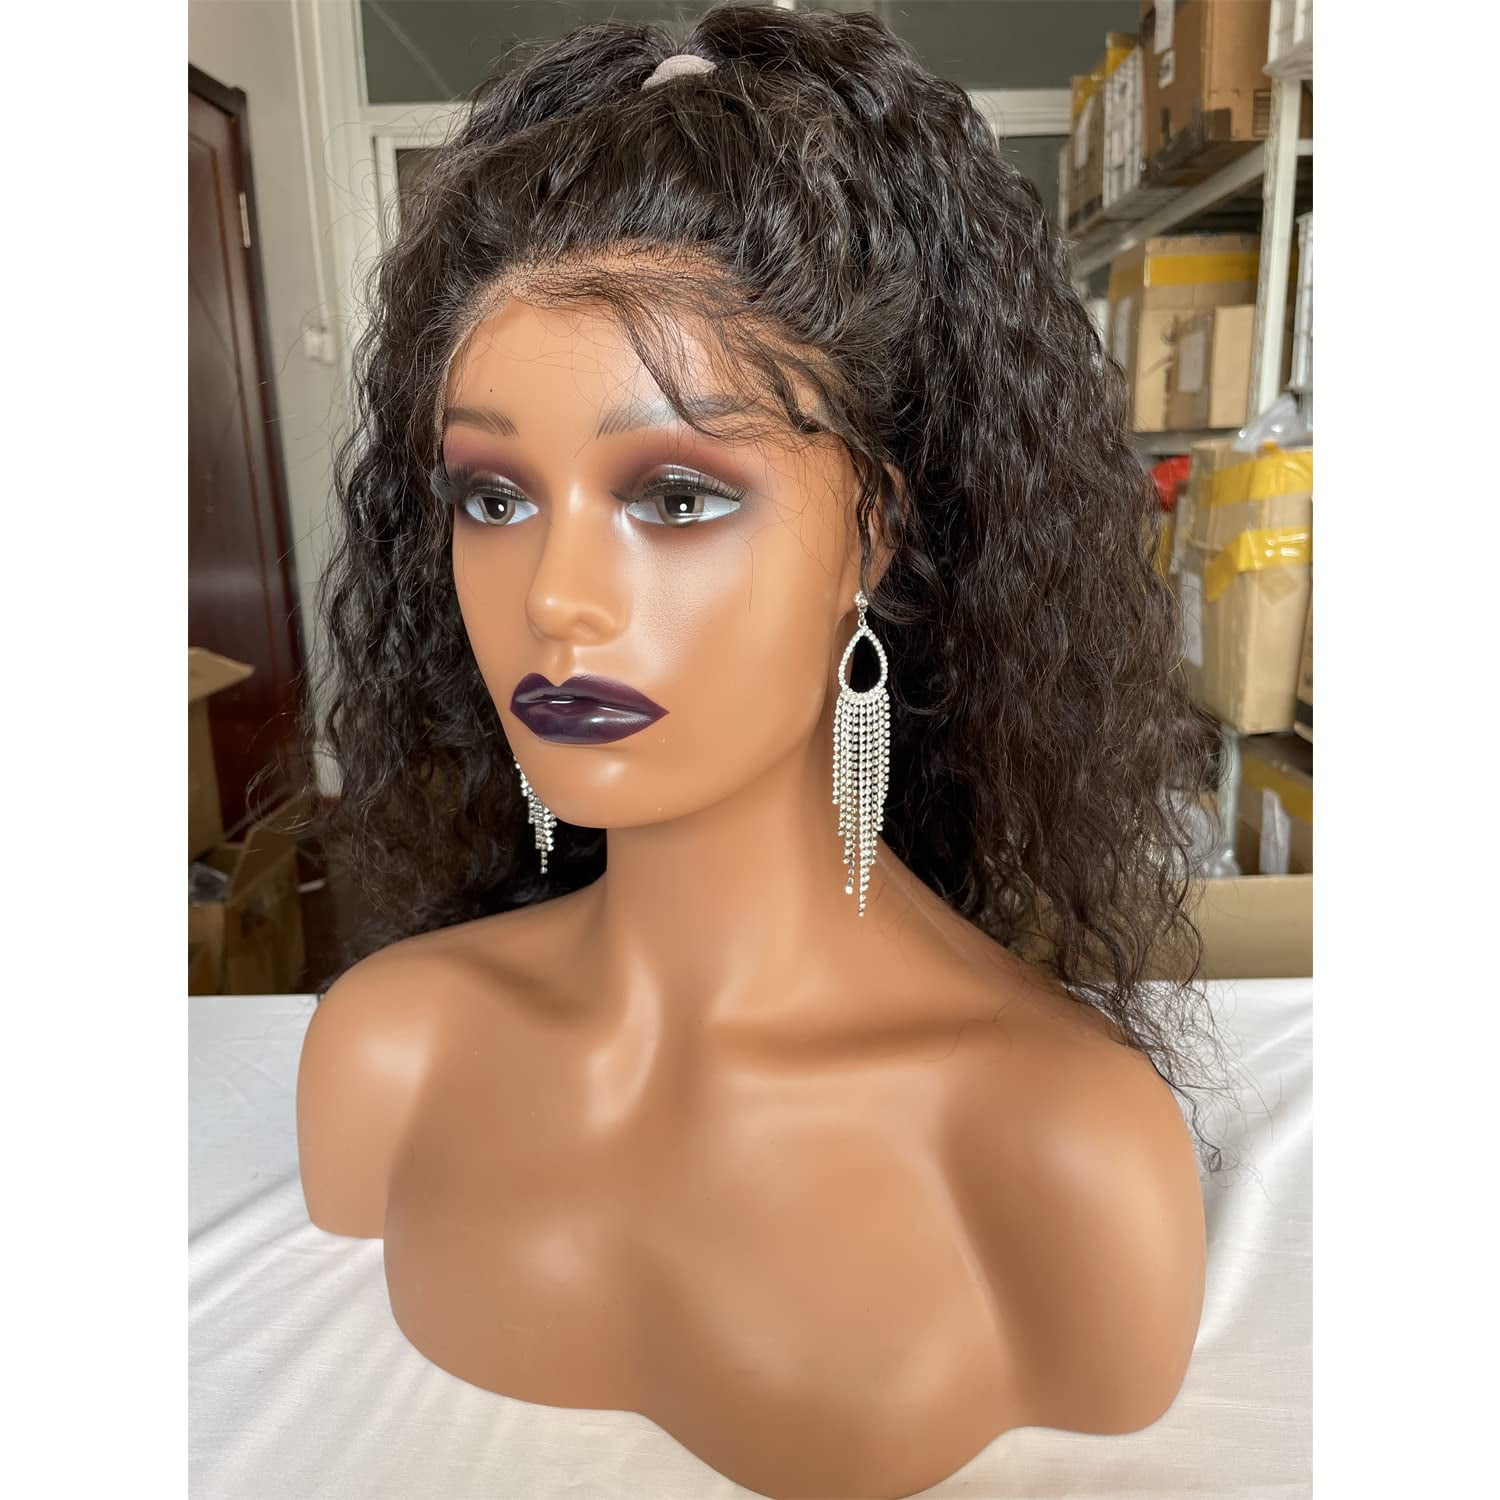 18 Realistic Mannequin Wig Head PVC Manikin shoulder Bust Stand